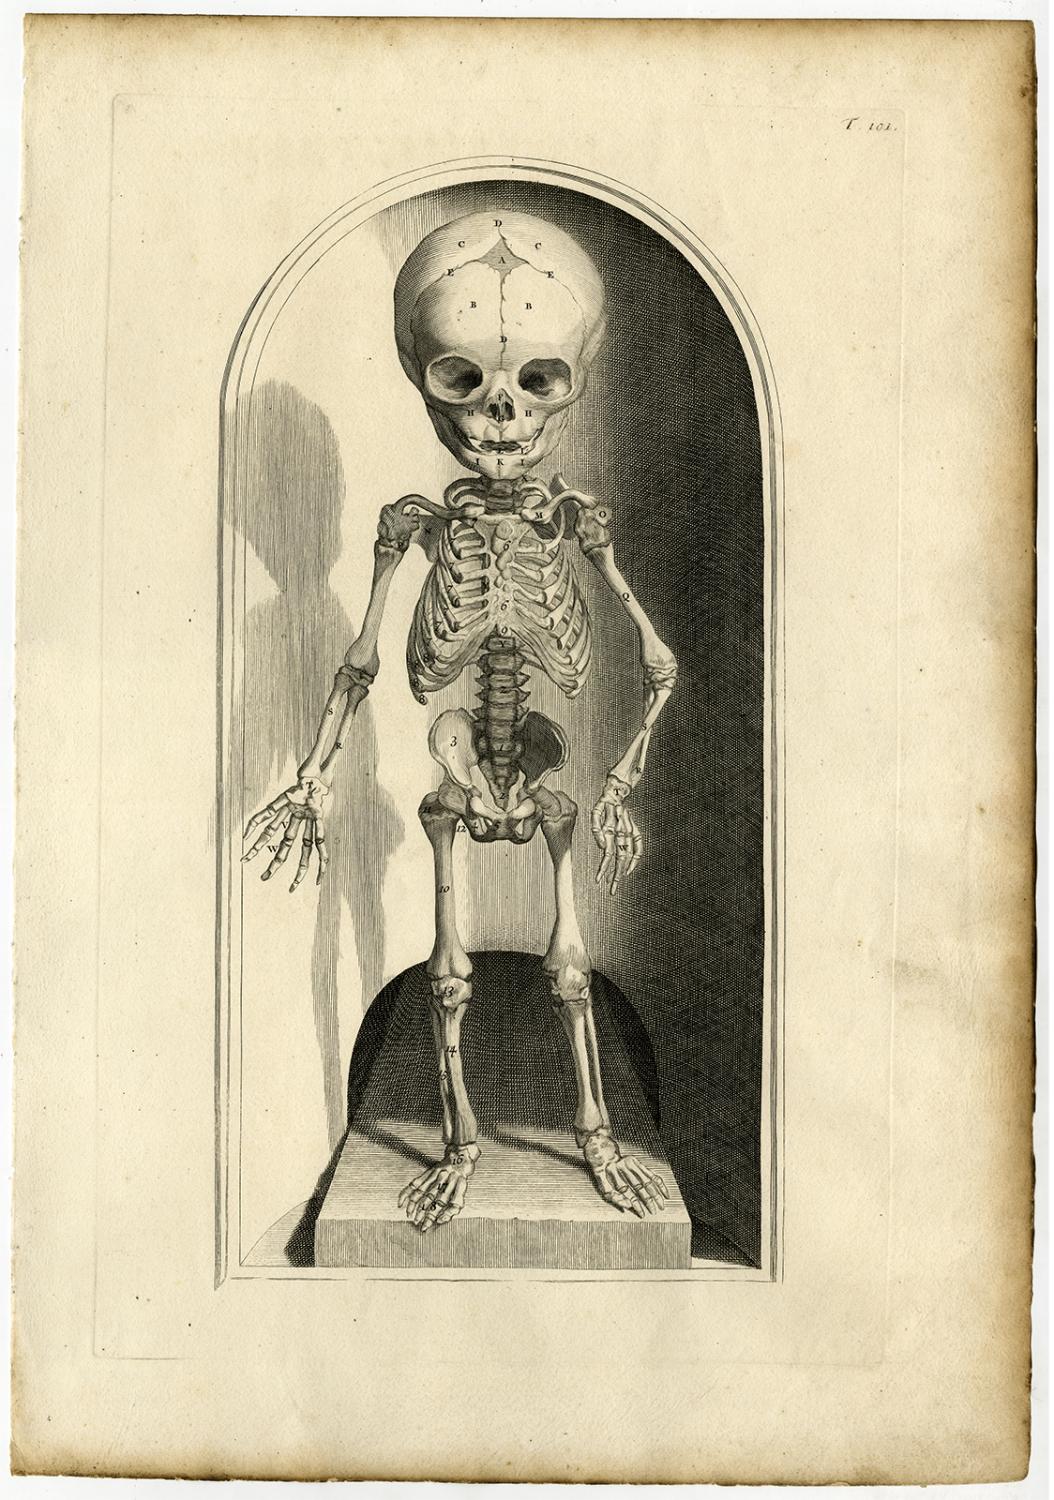 ML12 Vintage 1800's Medical Human Adult Infant Child Skull Poster RePrint A2/A3 